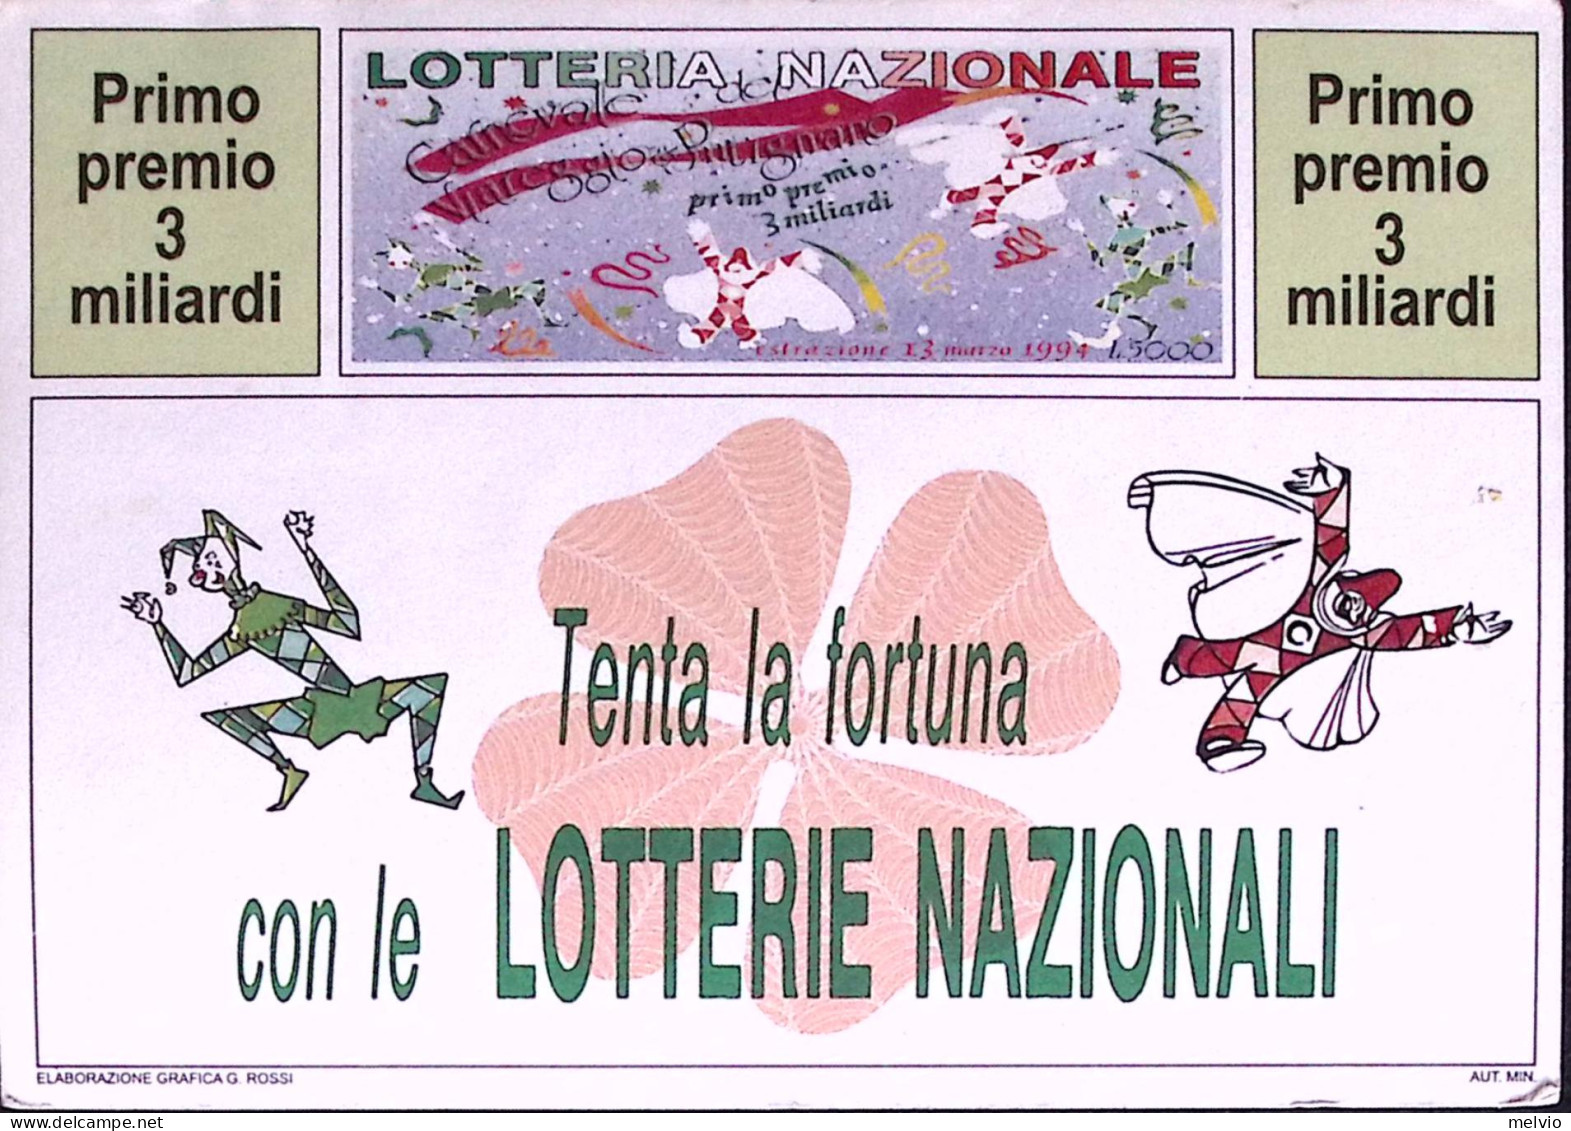 1994-FRODE POSTALE Francobolli Tunisia Su Cartolina Concorso Verona (3.3) - Tunisie (1956-...)